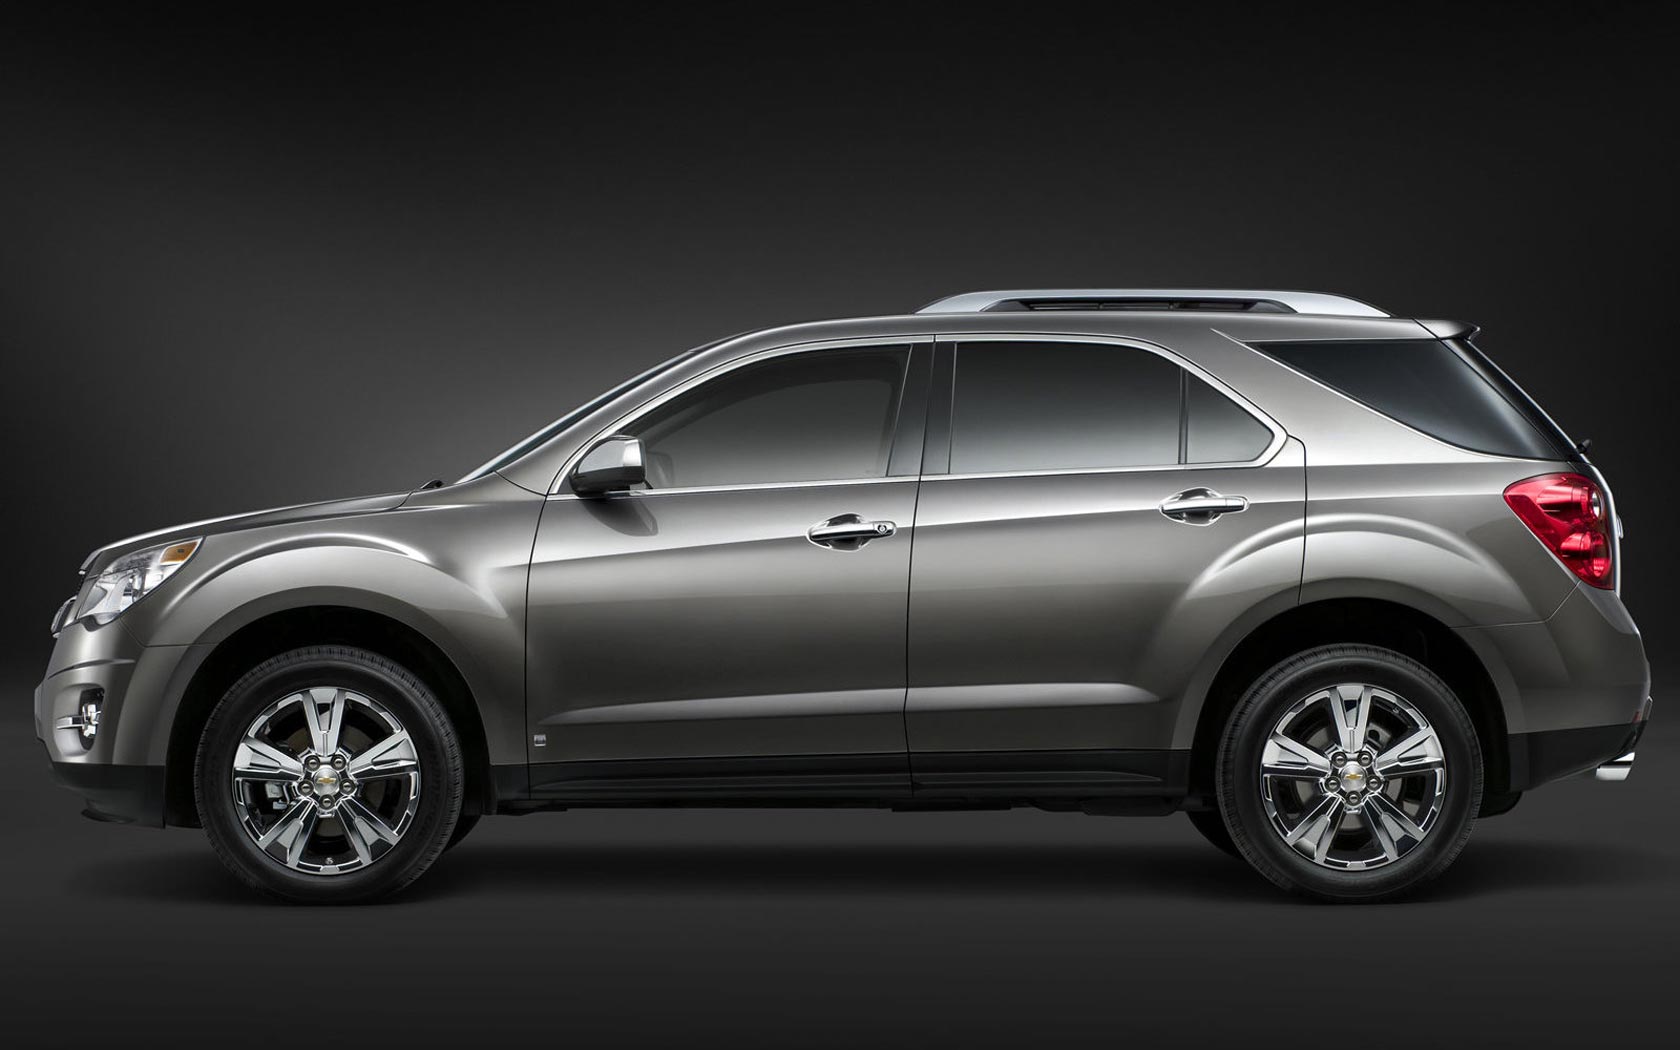  Chevrolet Equinox (2009-2015)